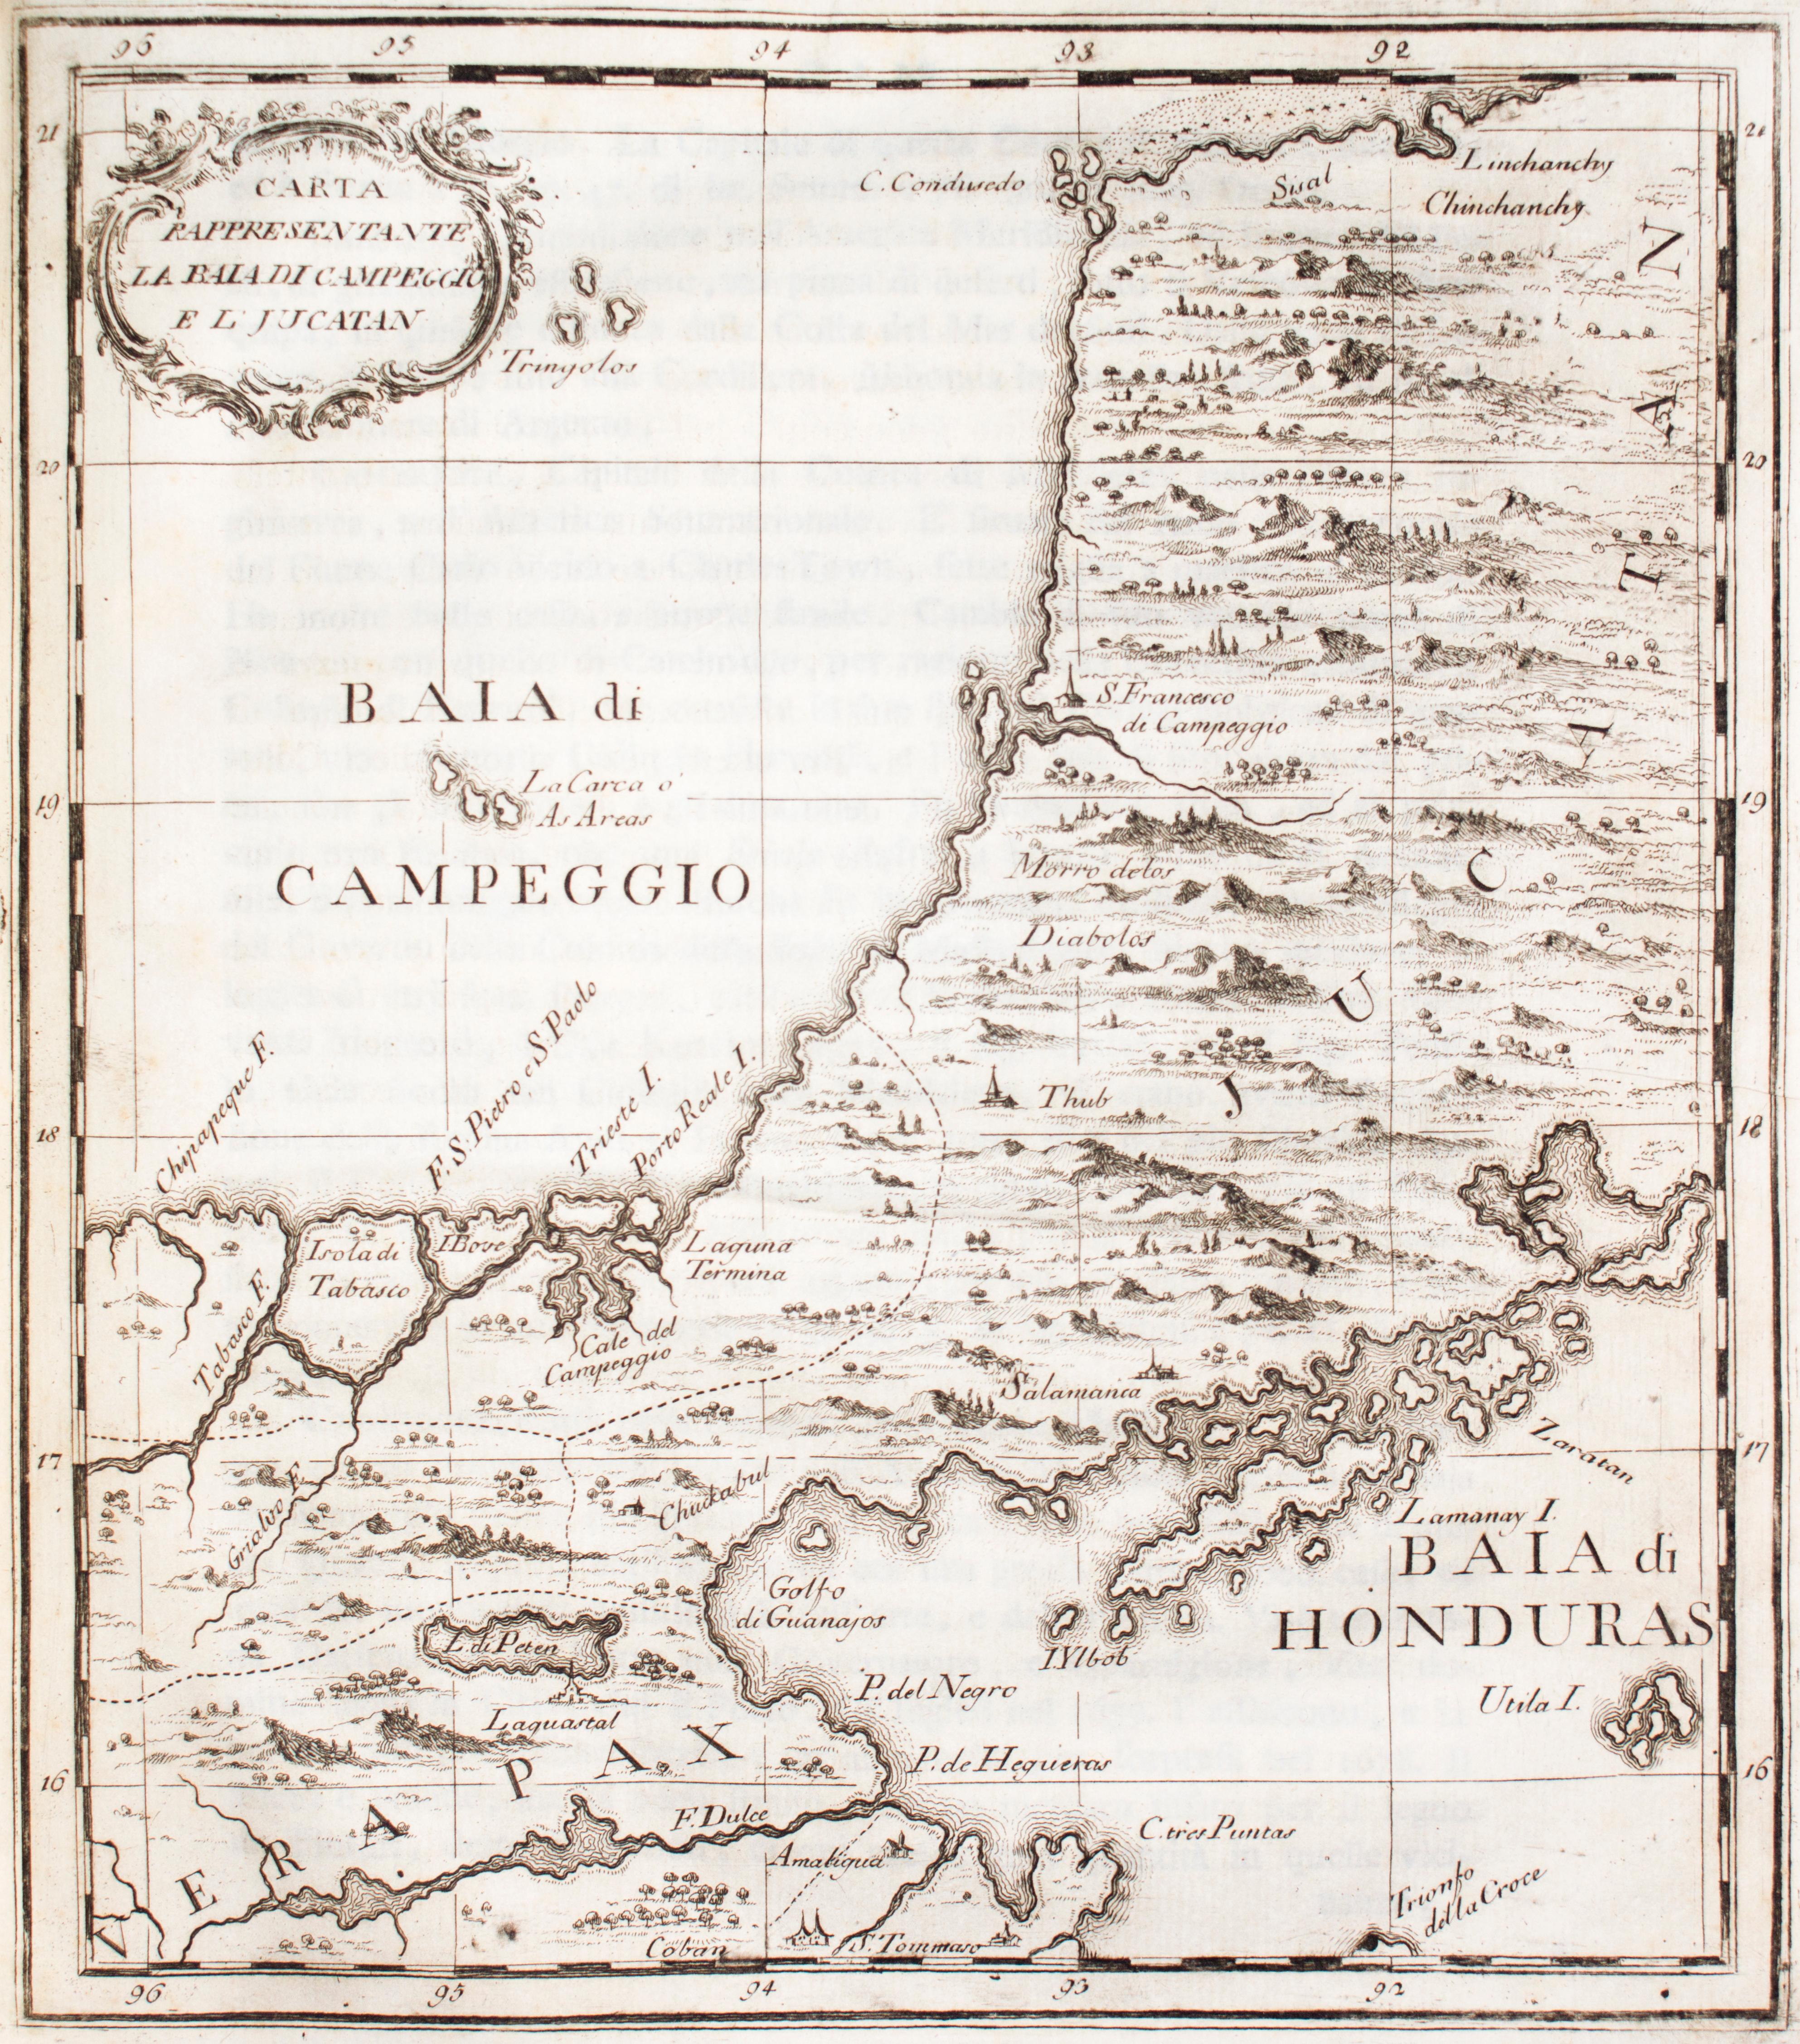 Il Gazzettiere Americano - Ancient Illustrated Book on the Americas - 1763 For Sale 1